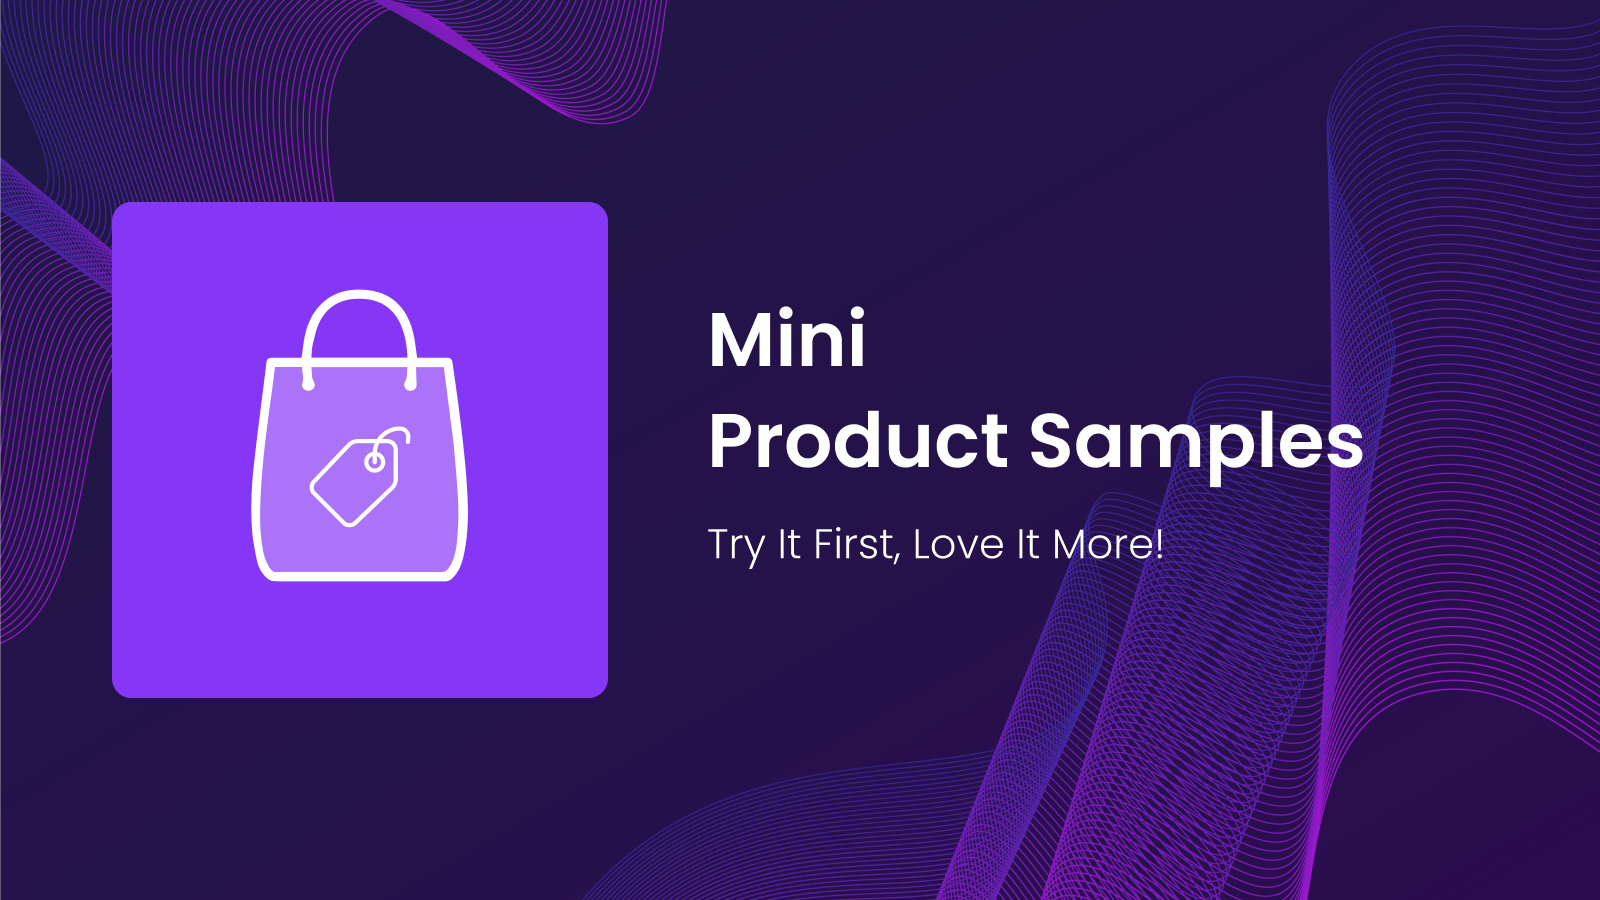 Mini Product Samples